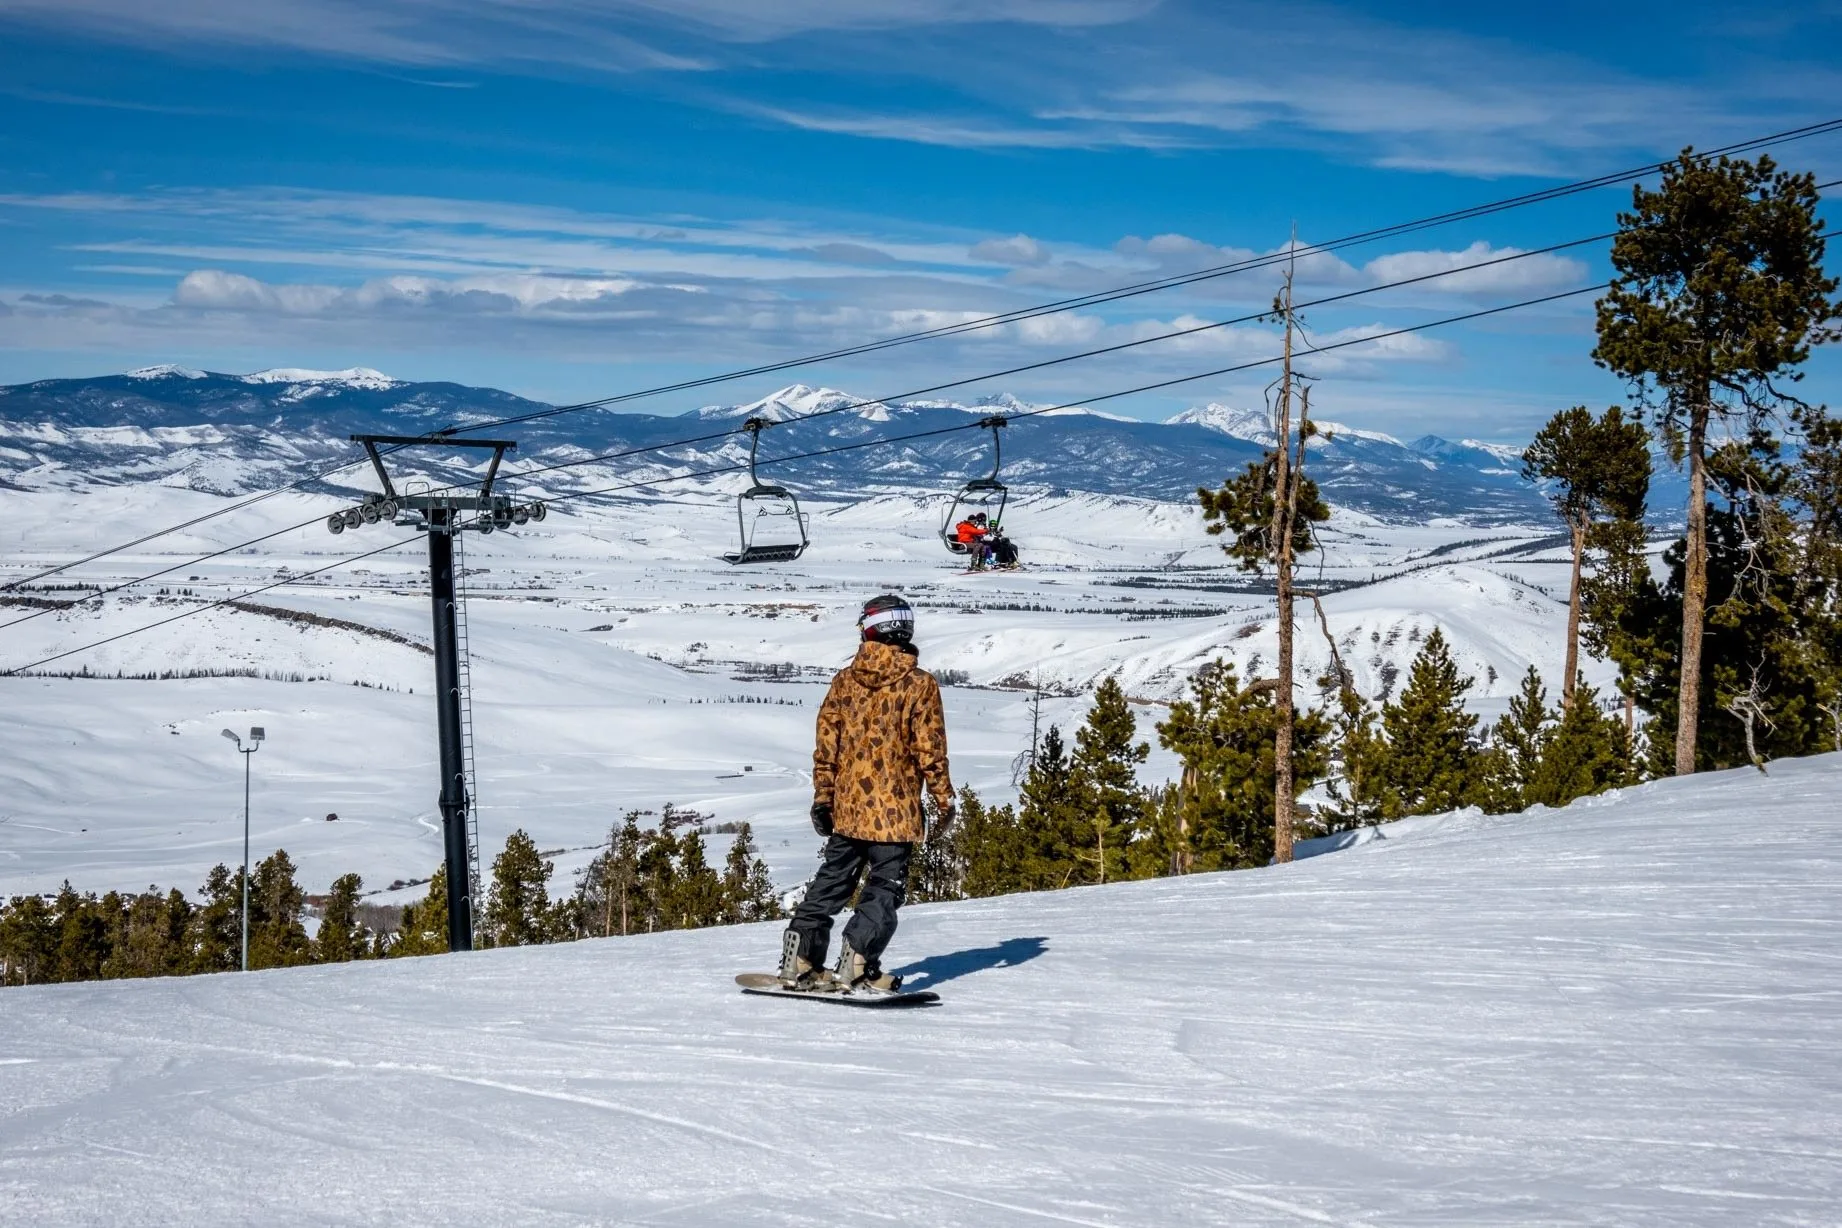 Snowboarder on a mountain near a ski lift